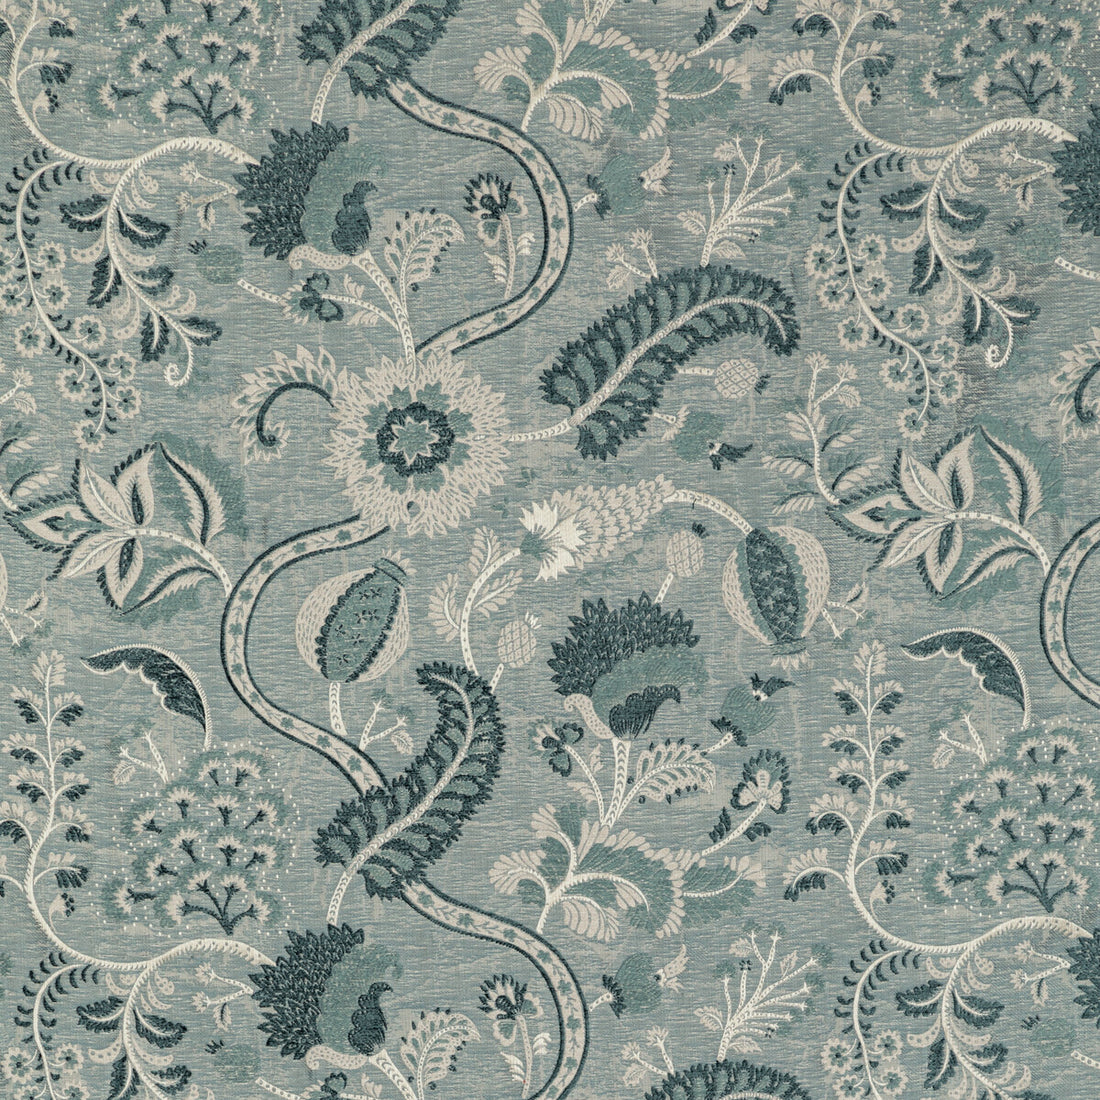 Jardin Bleu fabric in blue/aqua color - pattern 2020213.513.0 - by Lee Jofa in the Oscar De La Renta IV collection